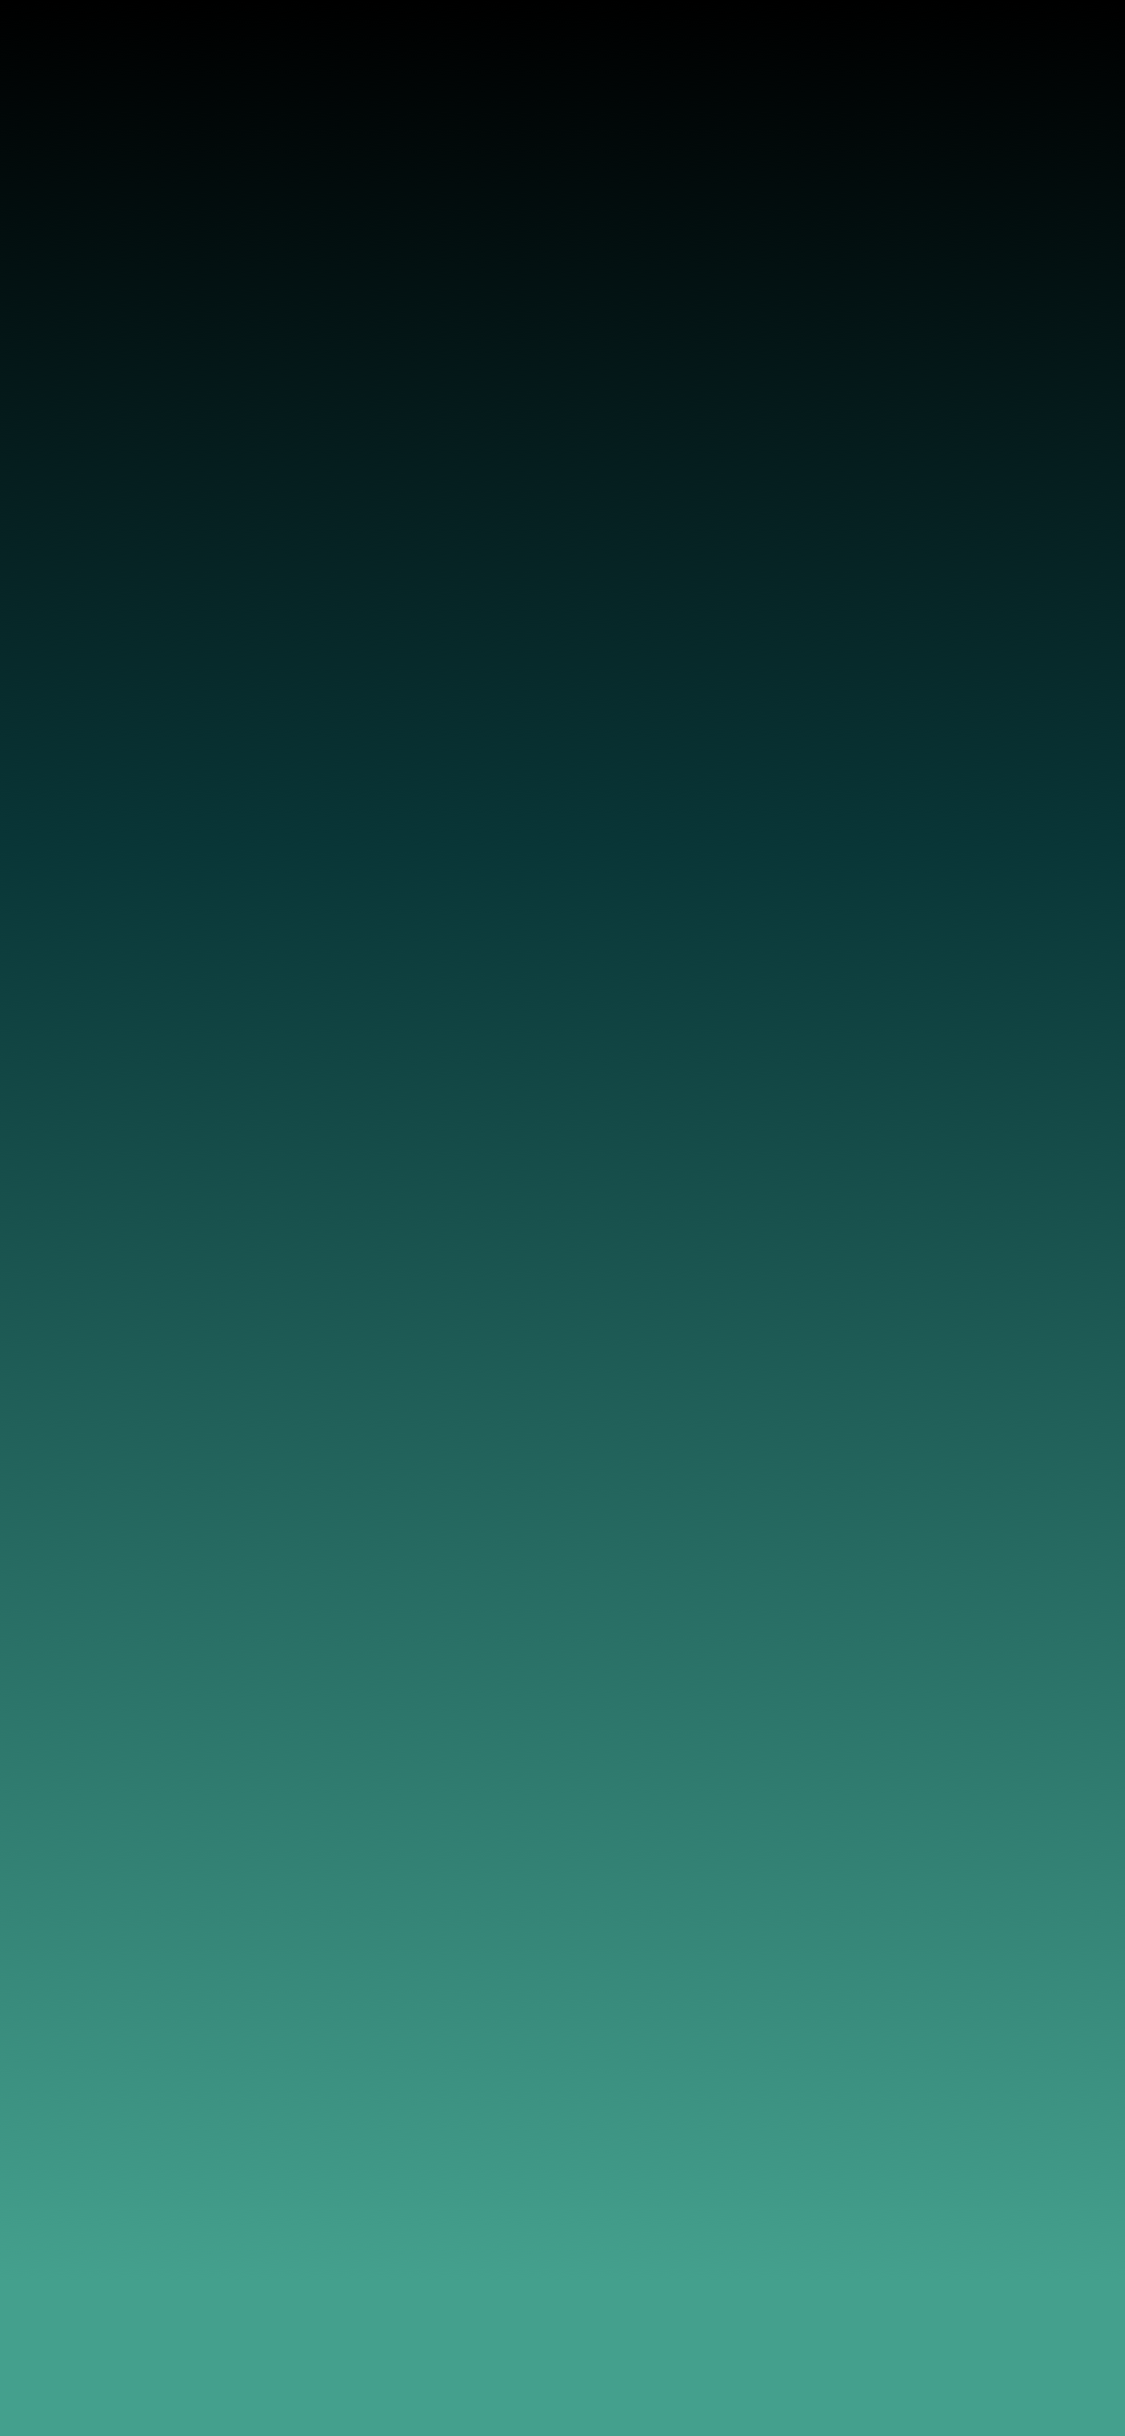 gradient iphone wallpaper,green,blue,aqua,turquoise,teal